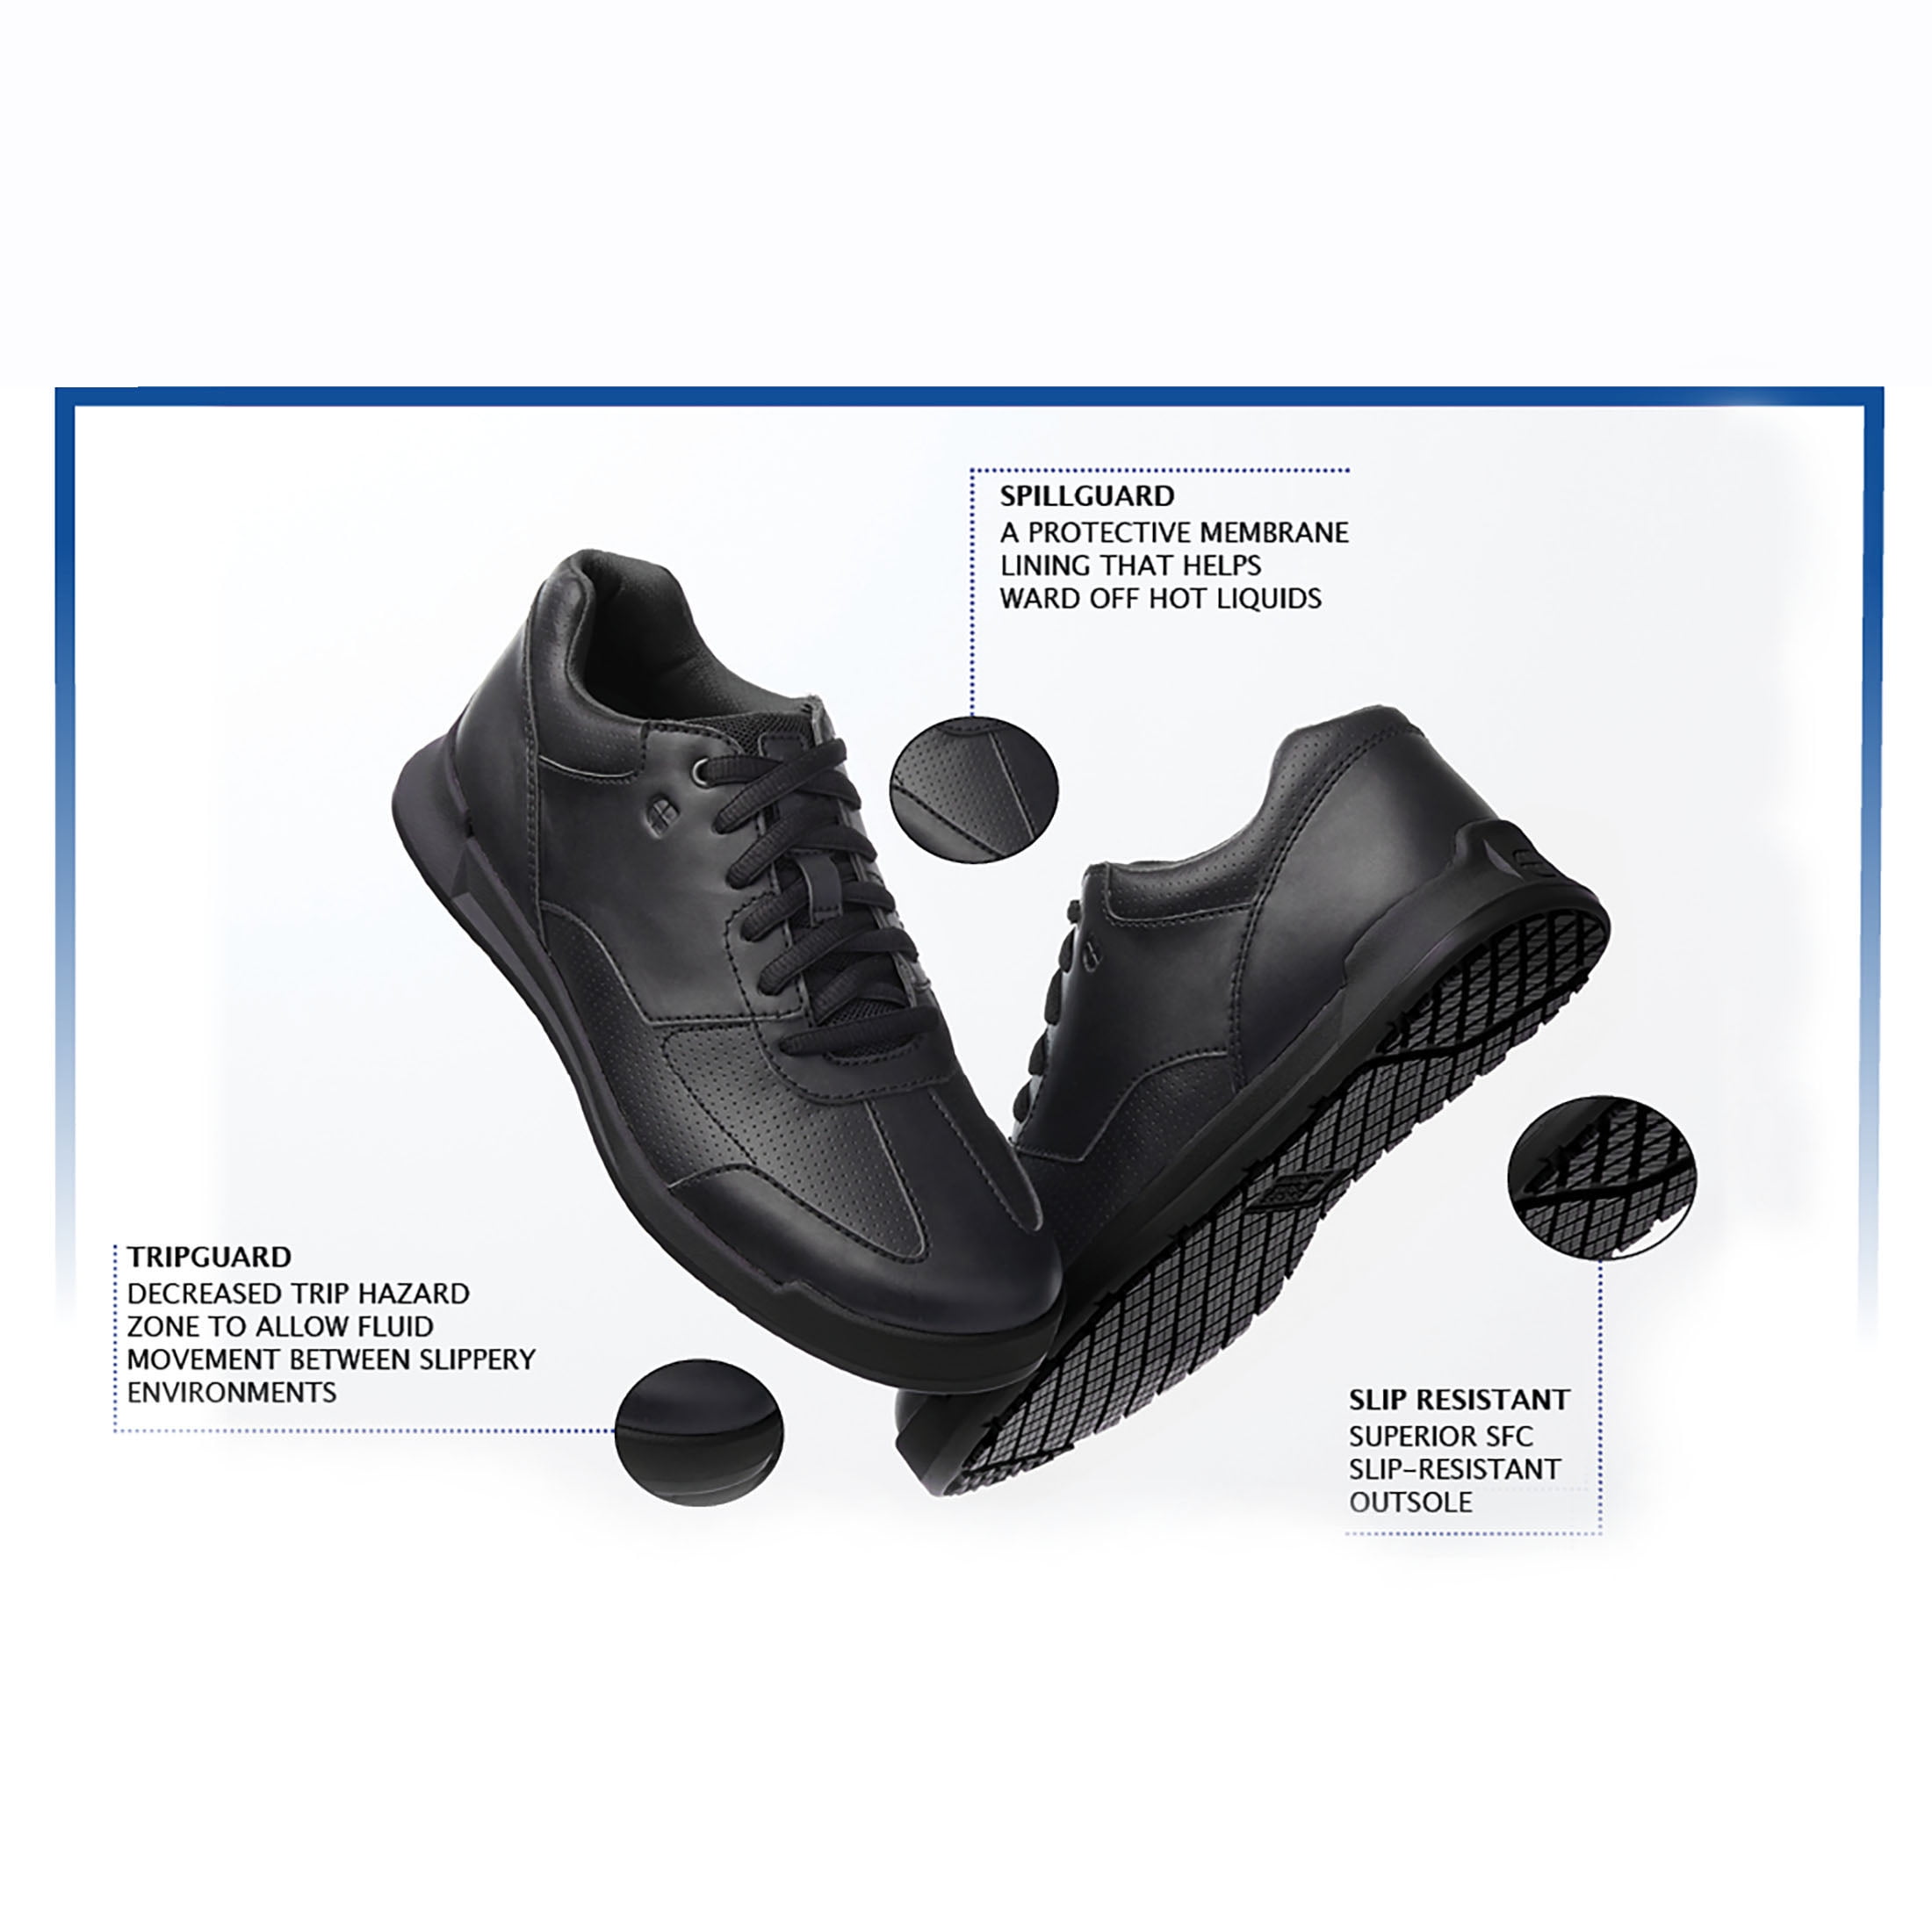 Shoes For Crews Womens Falcon II Soft Toe Black – Shoeteria